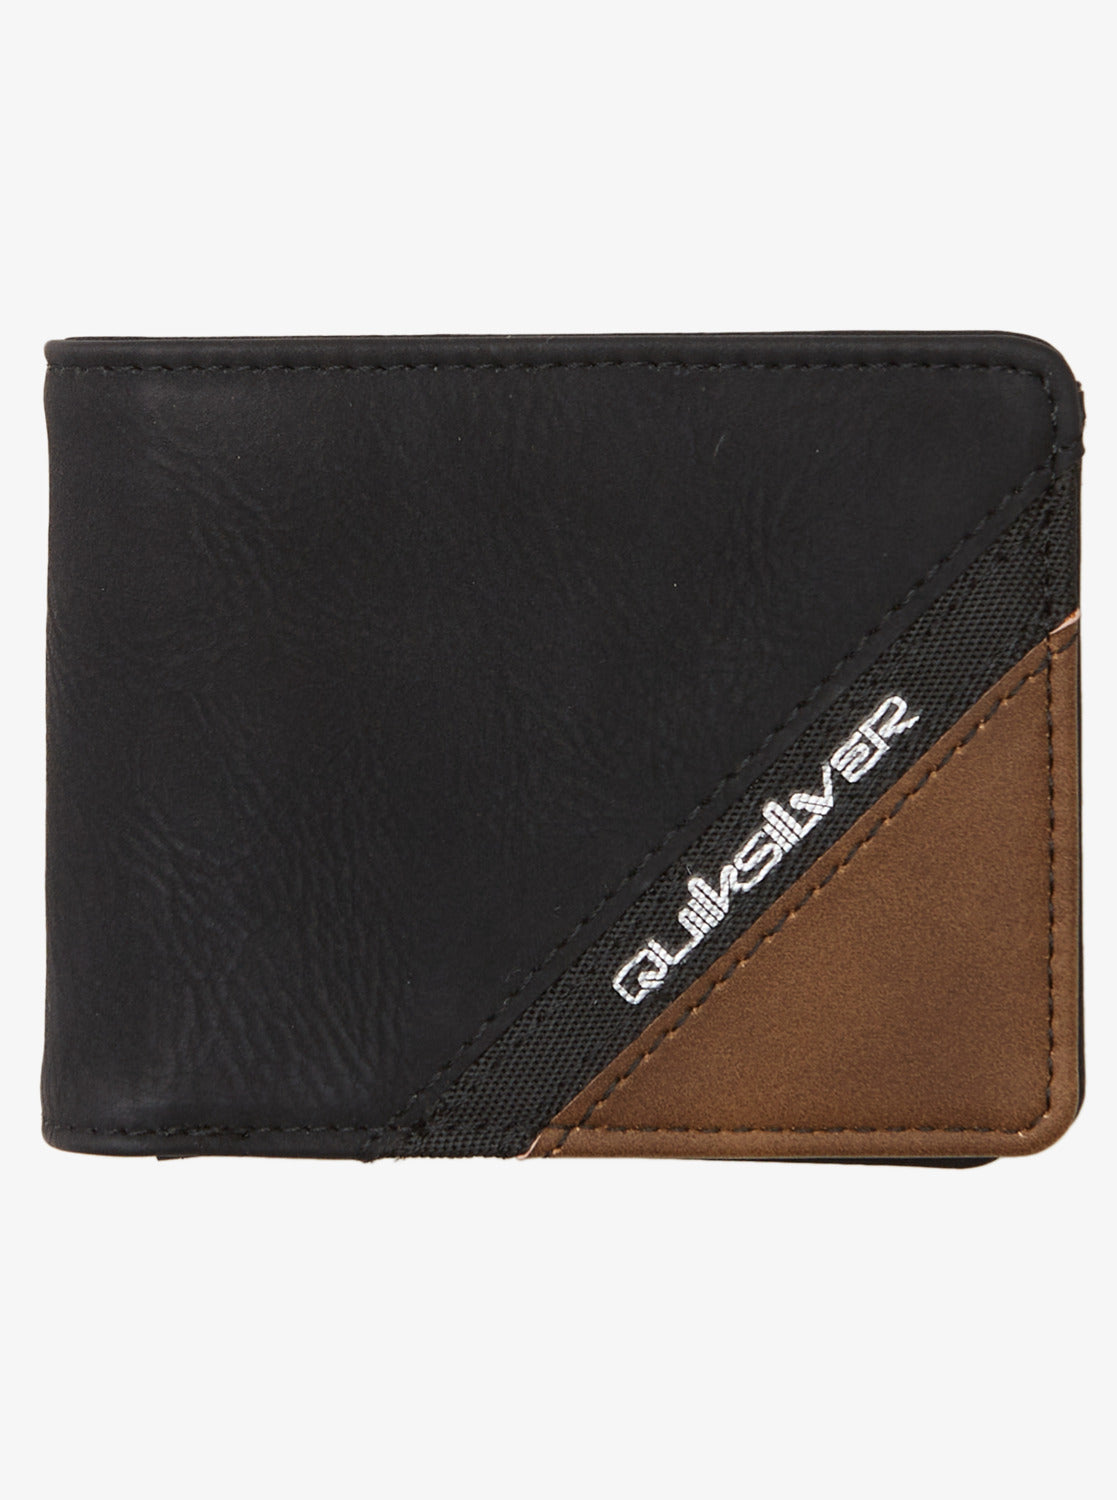 Quiksilver Thetford Wallet Black/Tan